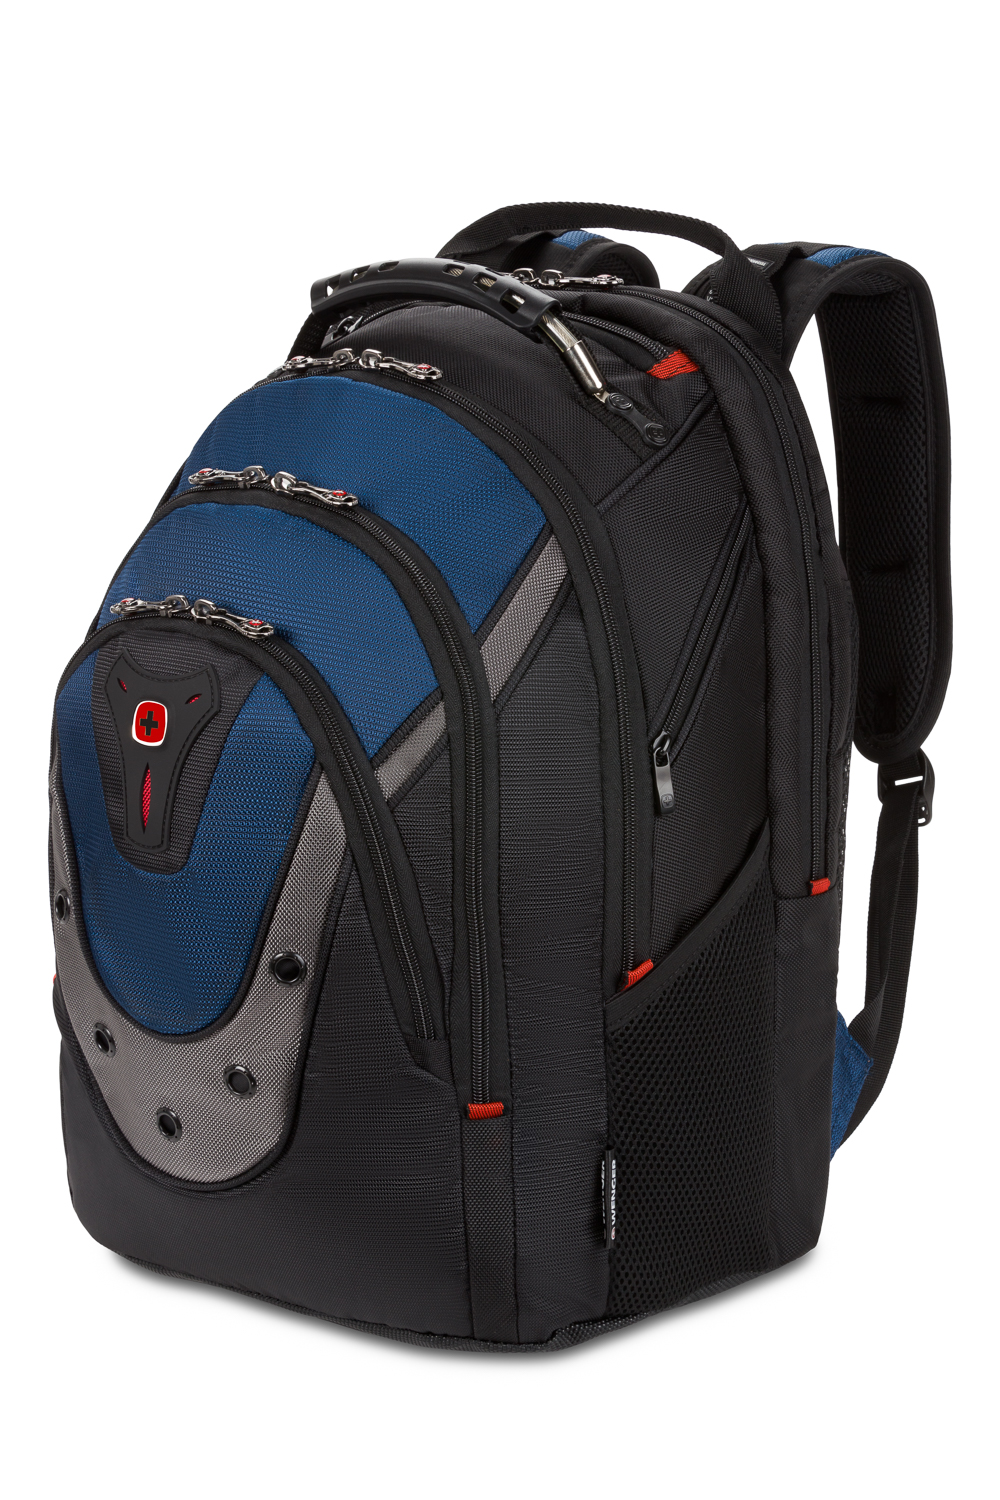 NEW Wenger Swissgear 17.1 inch Laptop Backpack/Notebook Bag/Rucksack Backpack 